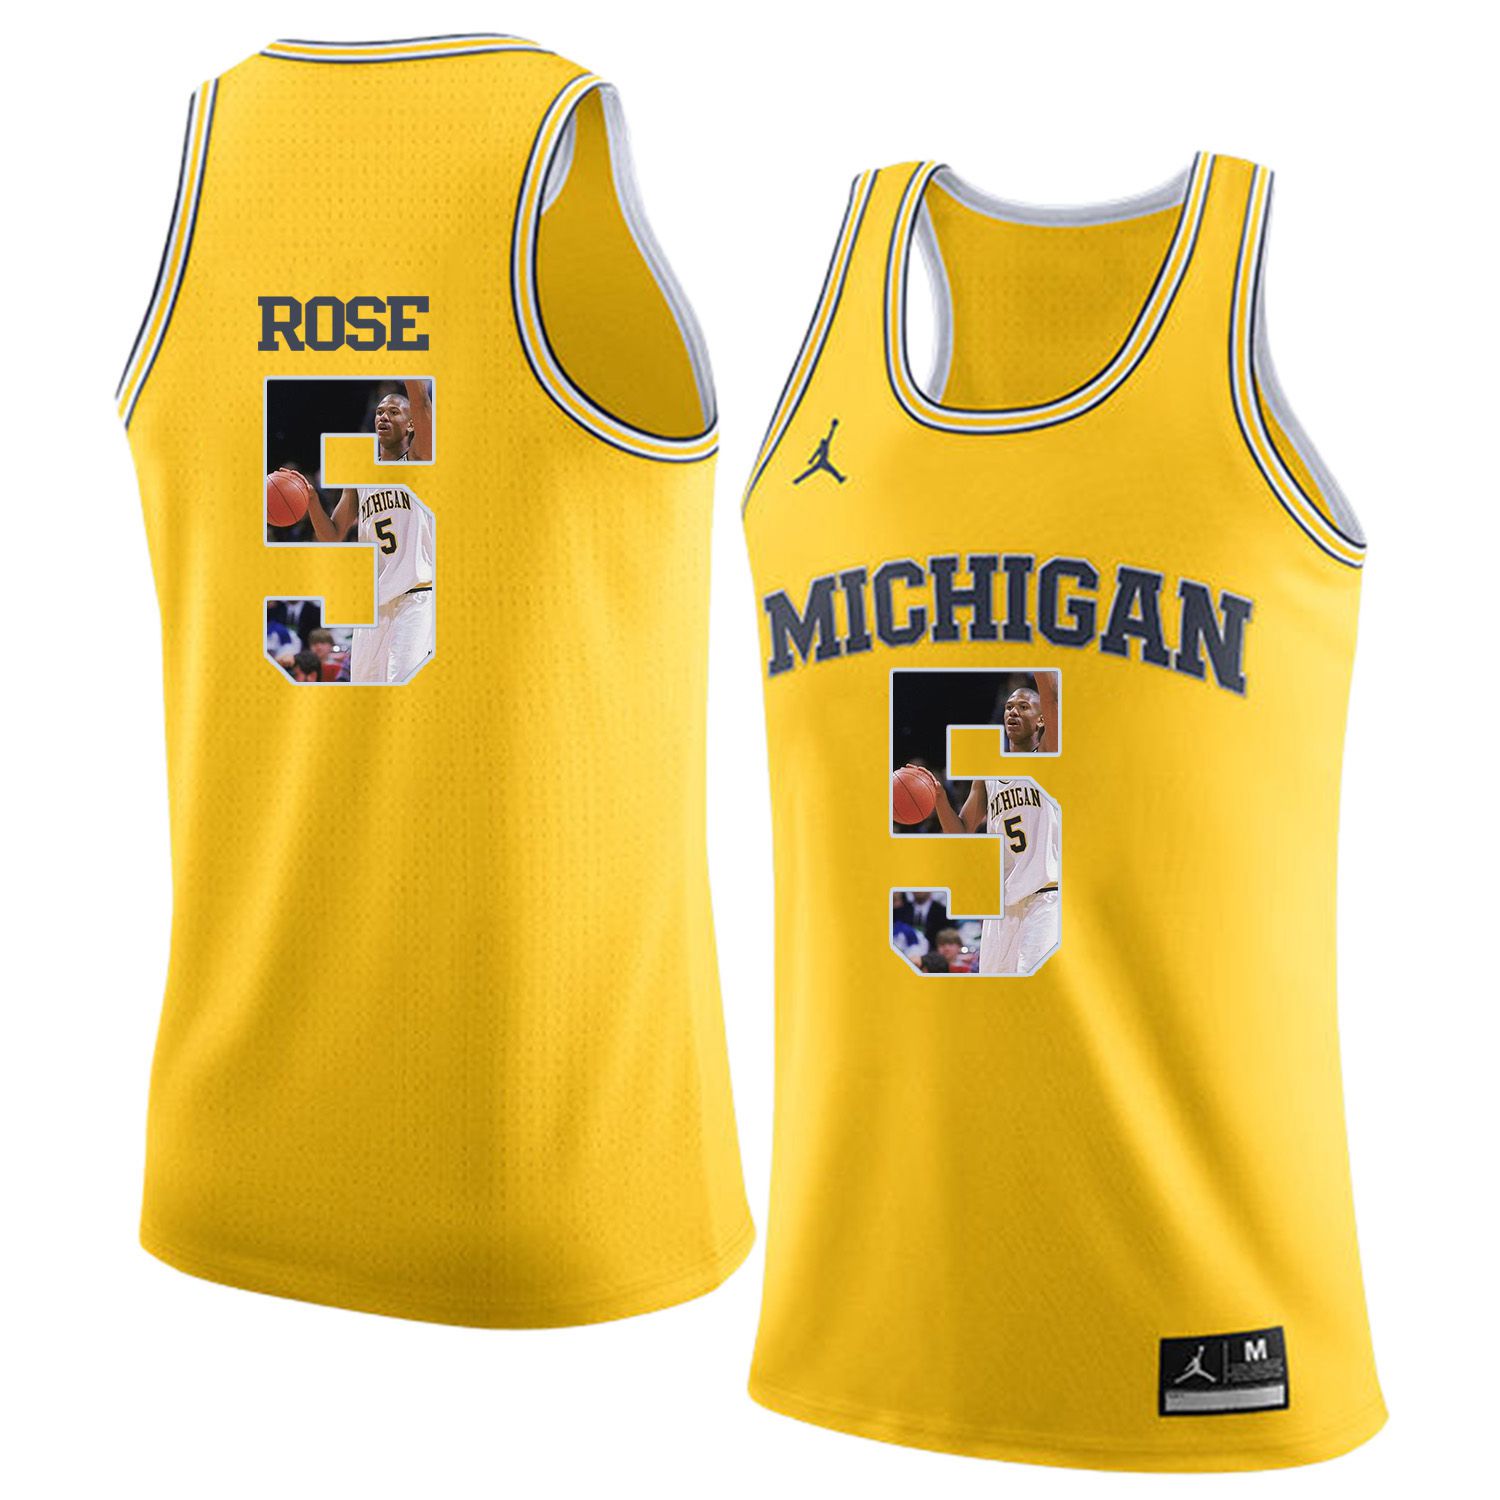 Men Jordan University of Michigan Basketball Yellow 5 Rose Fashion Edition Customized NCAA Jerseys